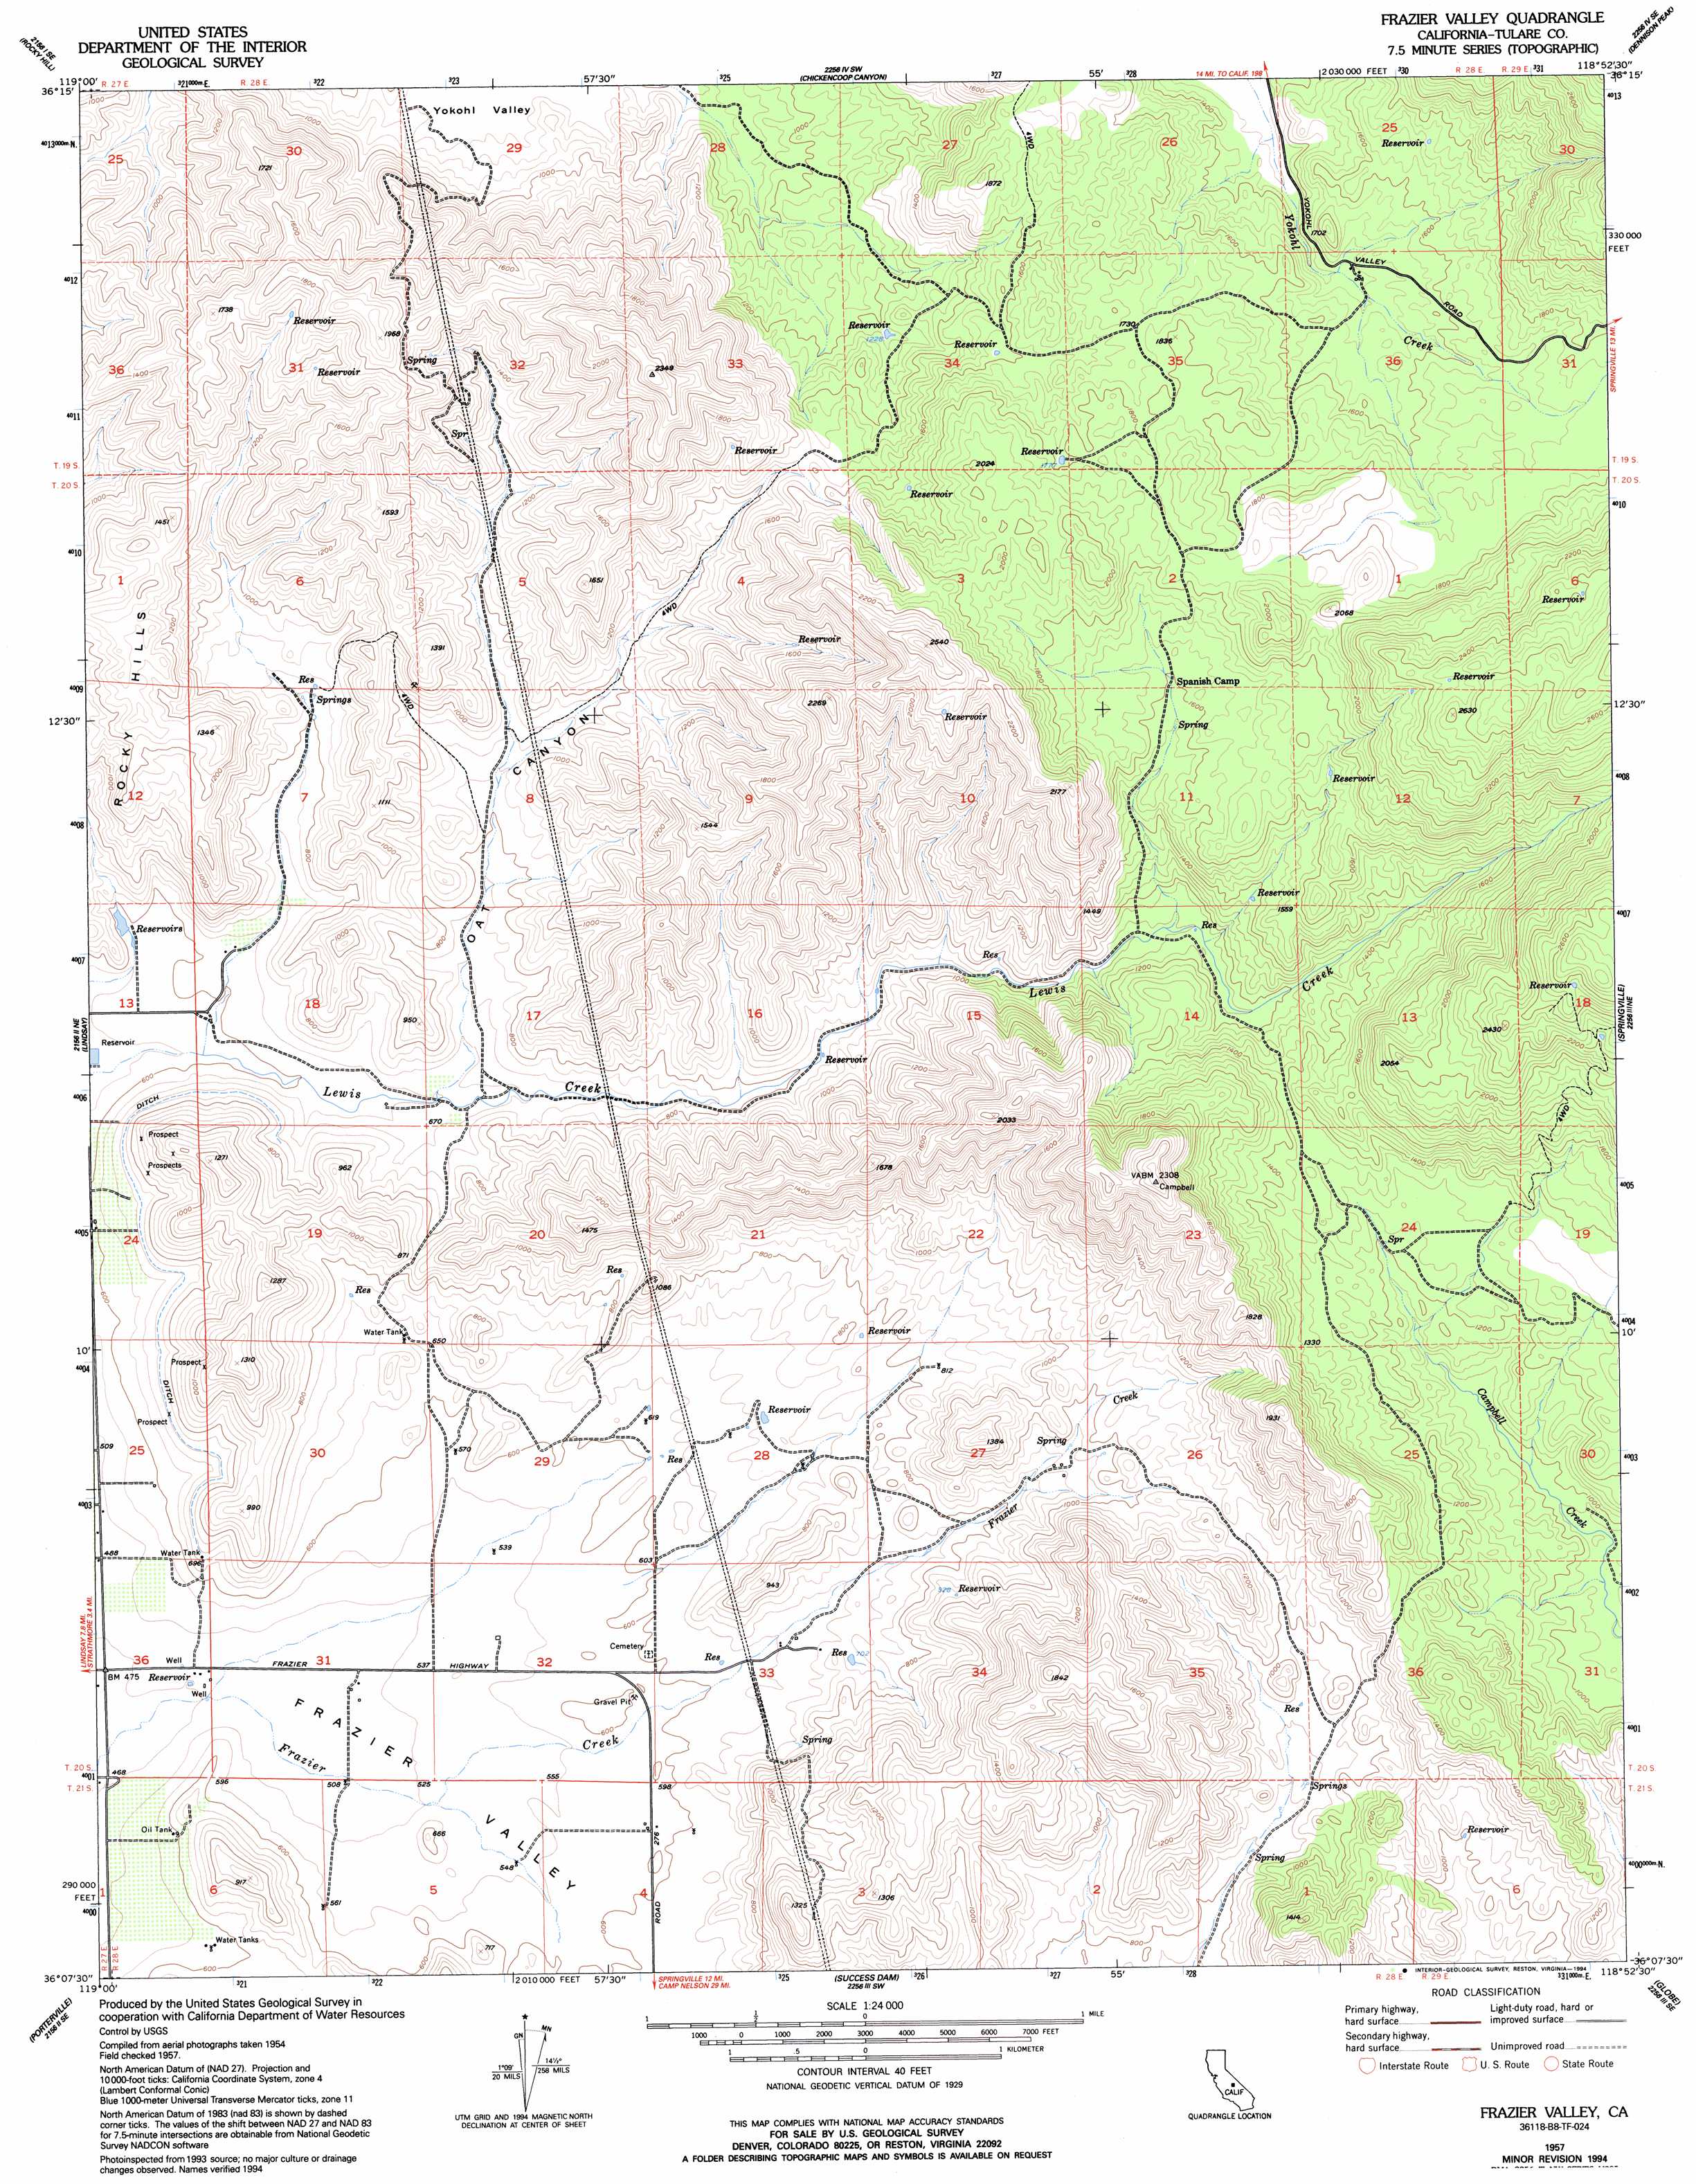 Frazier Valley topographic map, CA - USGS Topo Quad 36118b8